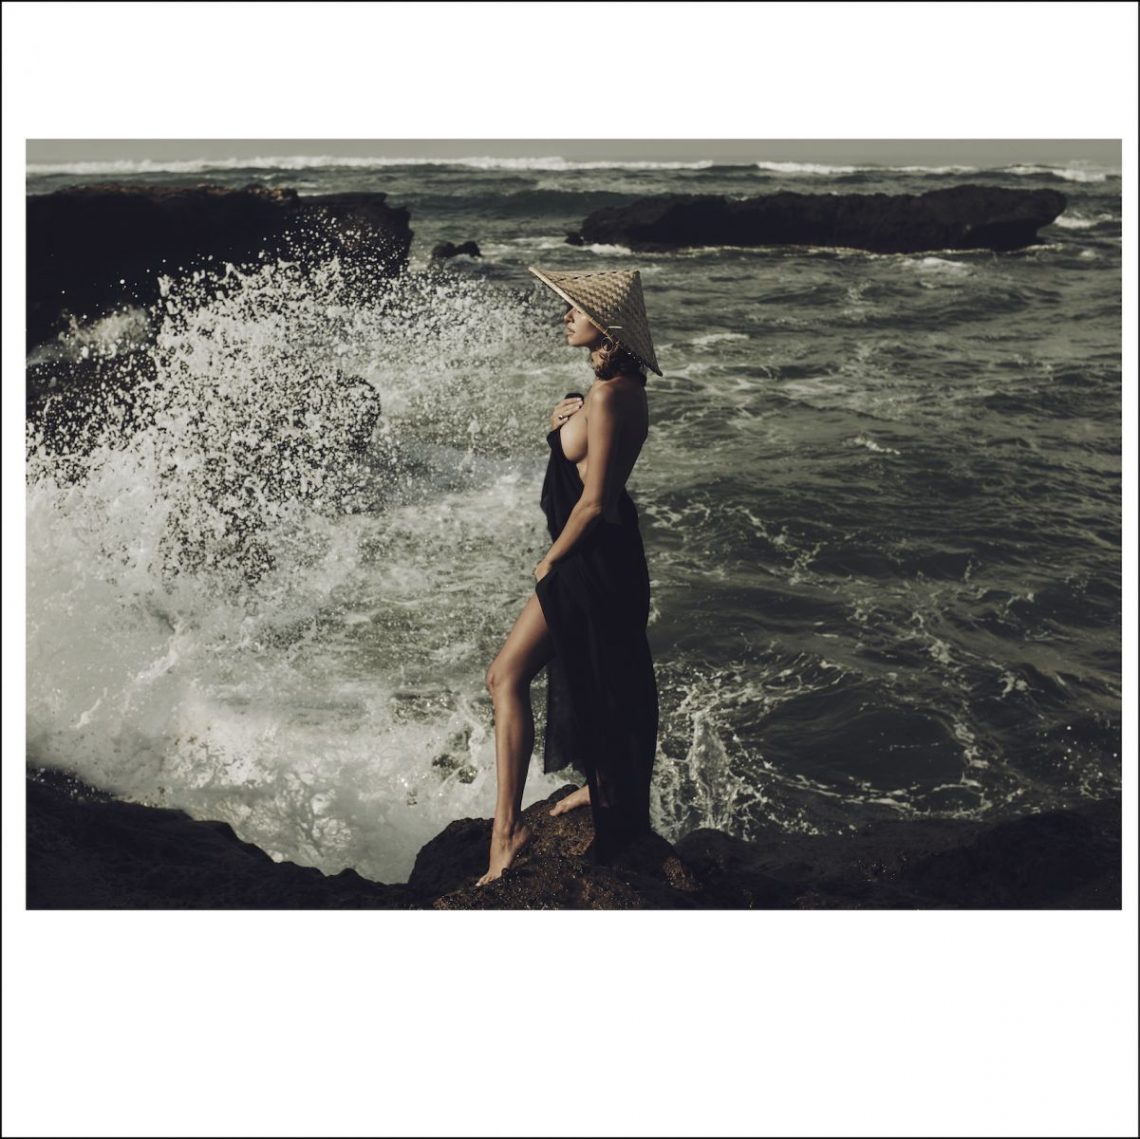 Balistarz-model-Raluca-Cojocaru-landscape-beach-shoot-in-a-black-dress-with-the-waves-crashing